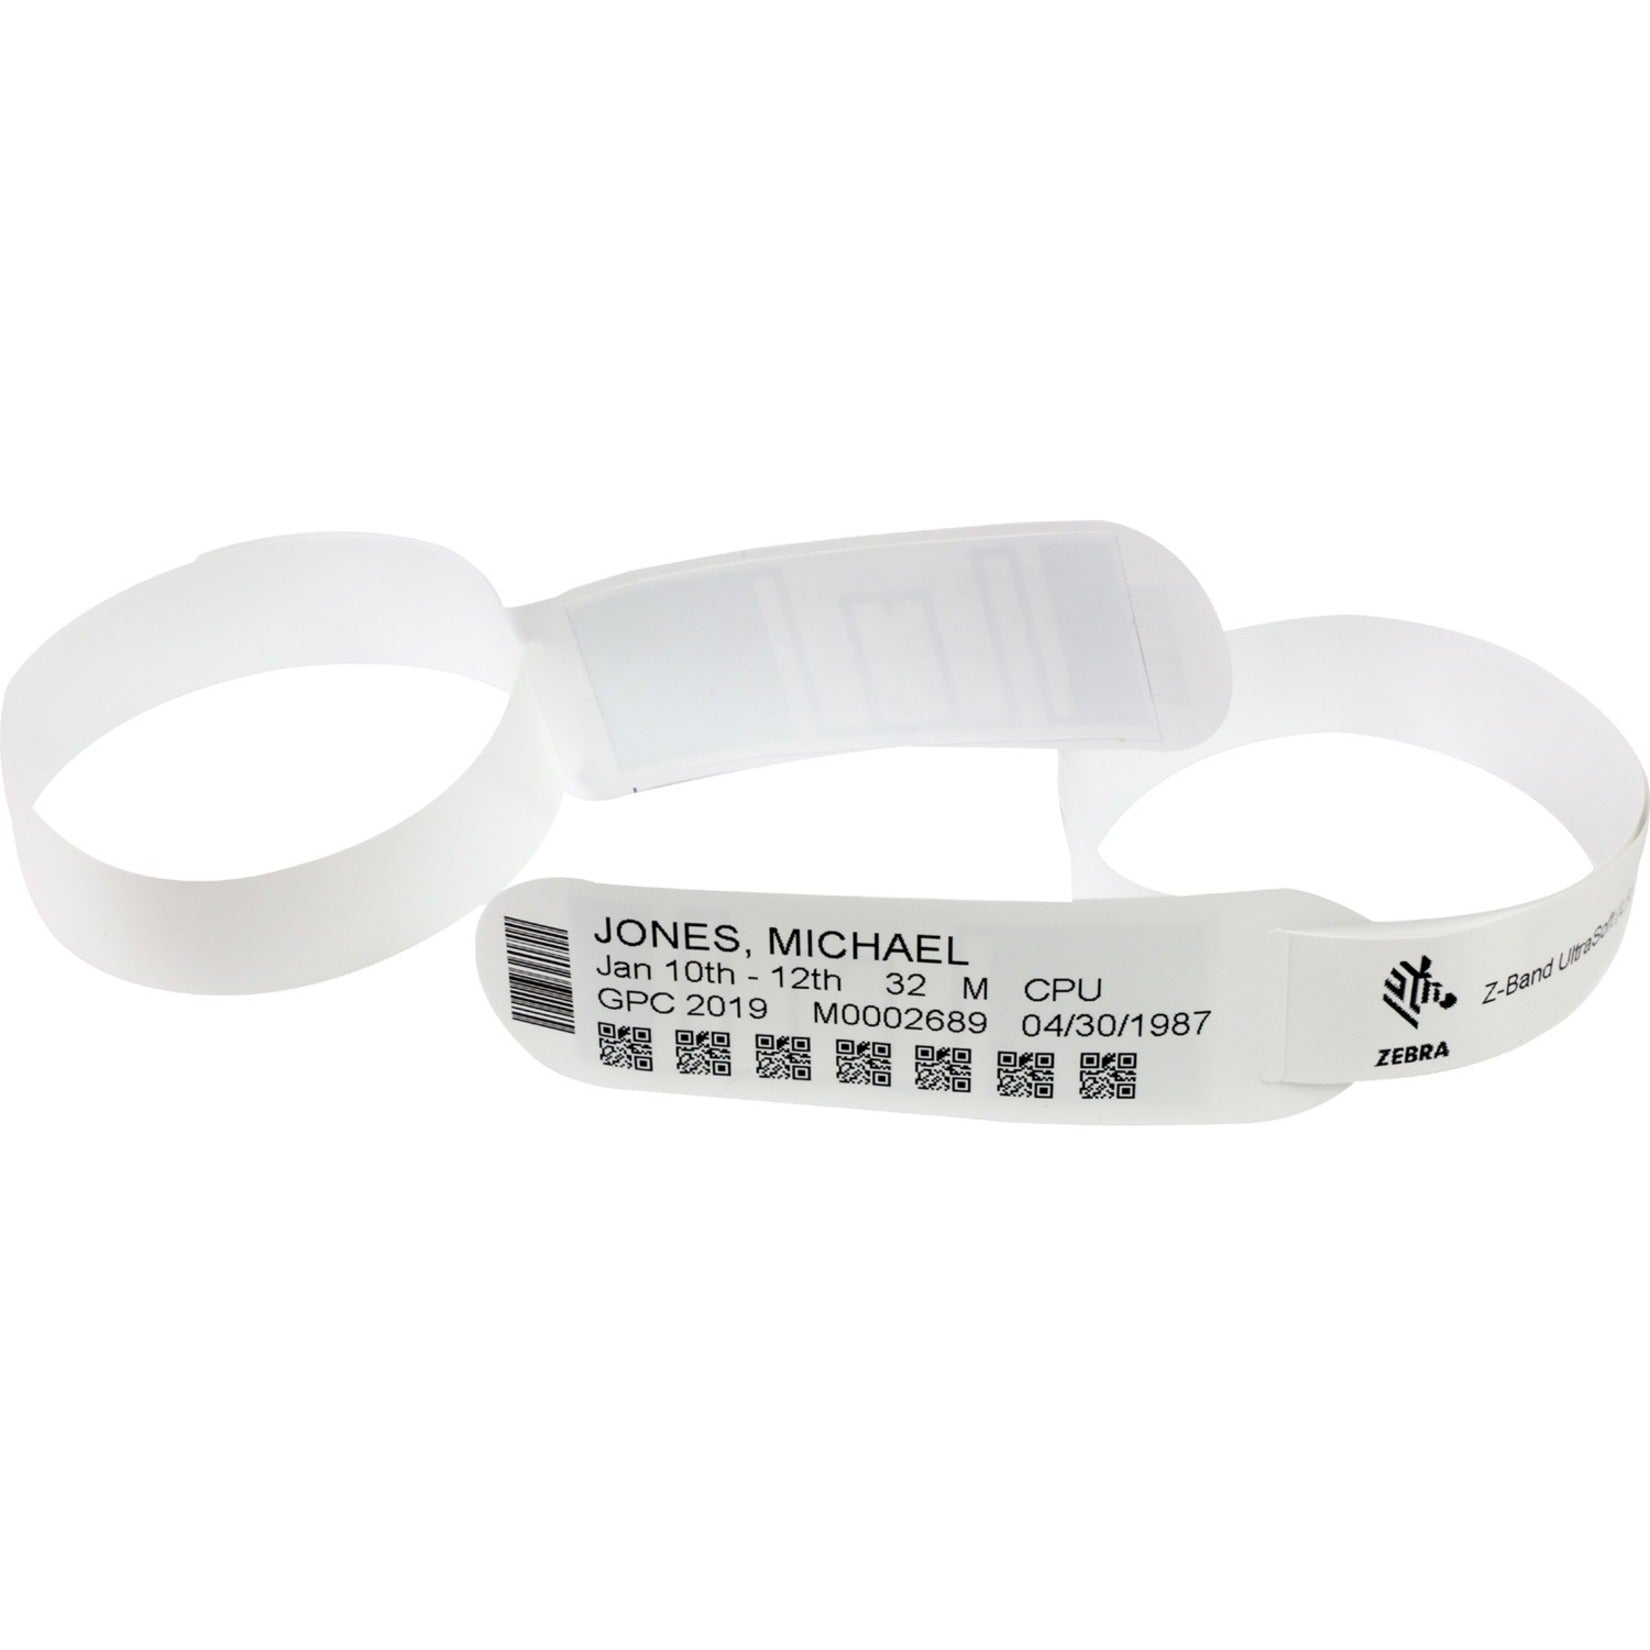 Zebra 10015358K Z-Band UltraSoft Wristband Cartridge Kit (White), Tamper Evident, Scannable, Perforated, Adhesive Closure